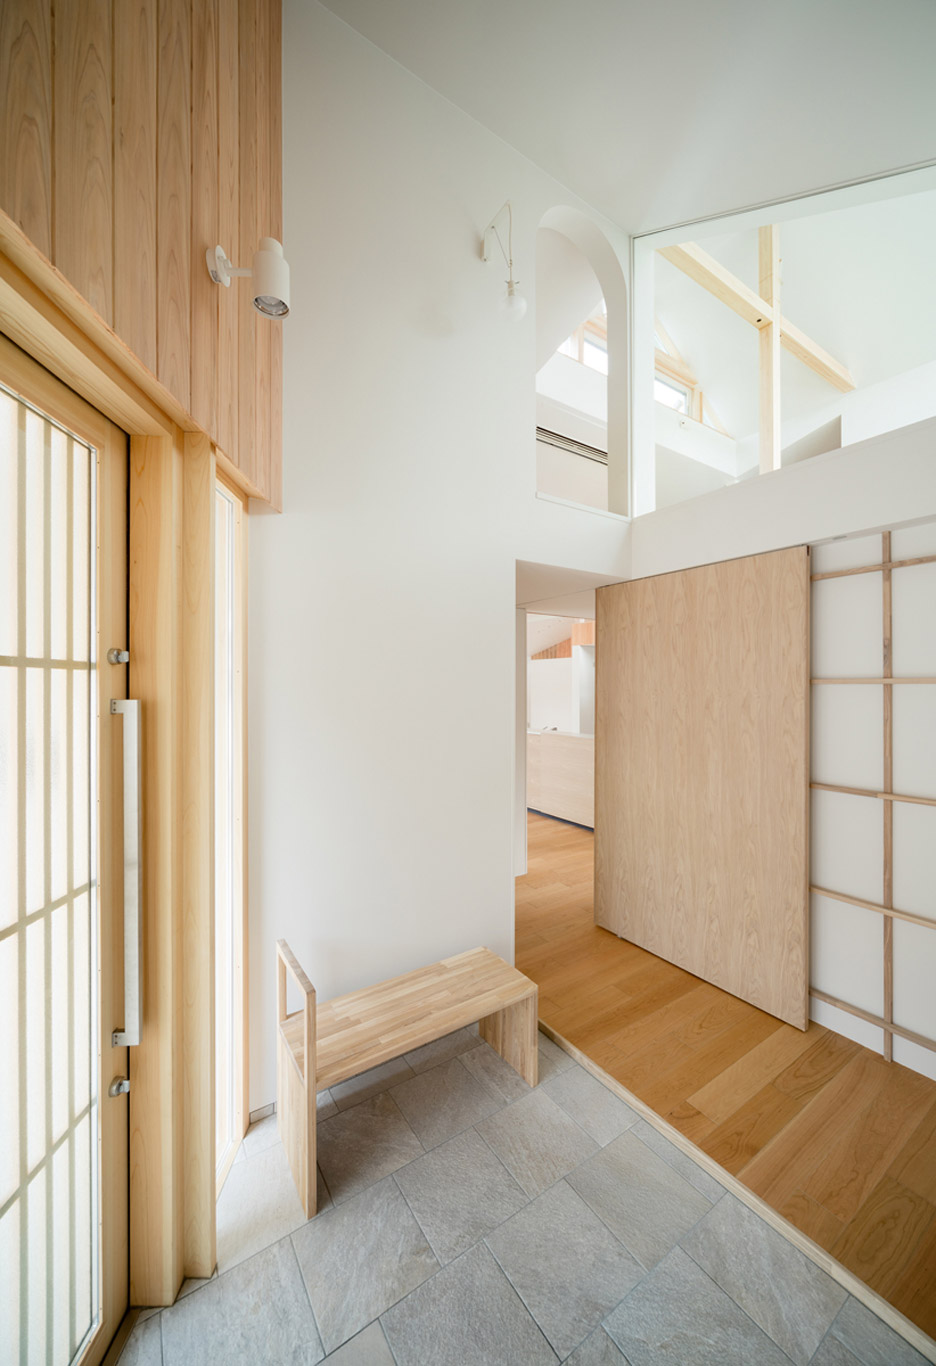 House with dormer window, Japan by Hiroki Tominaga